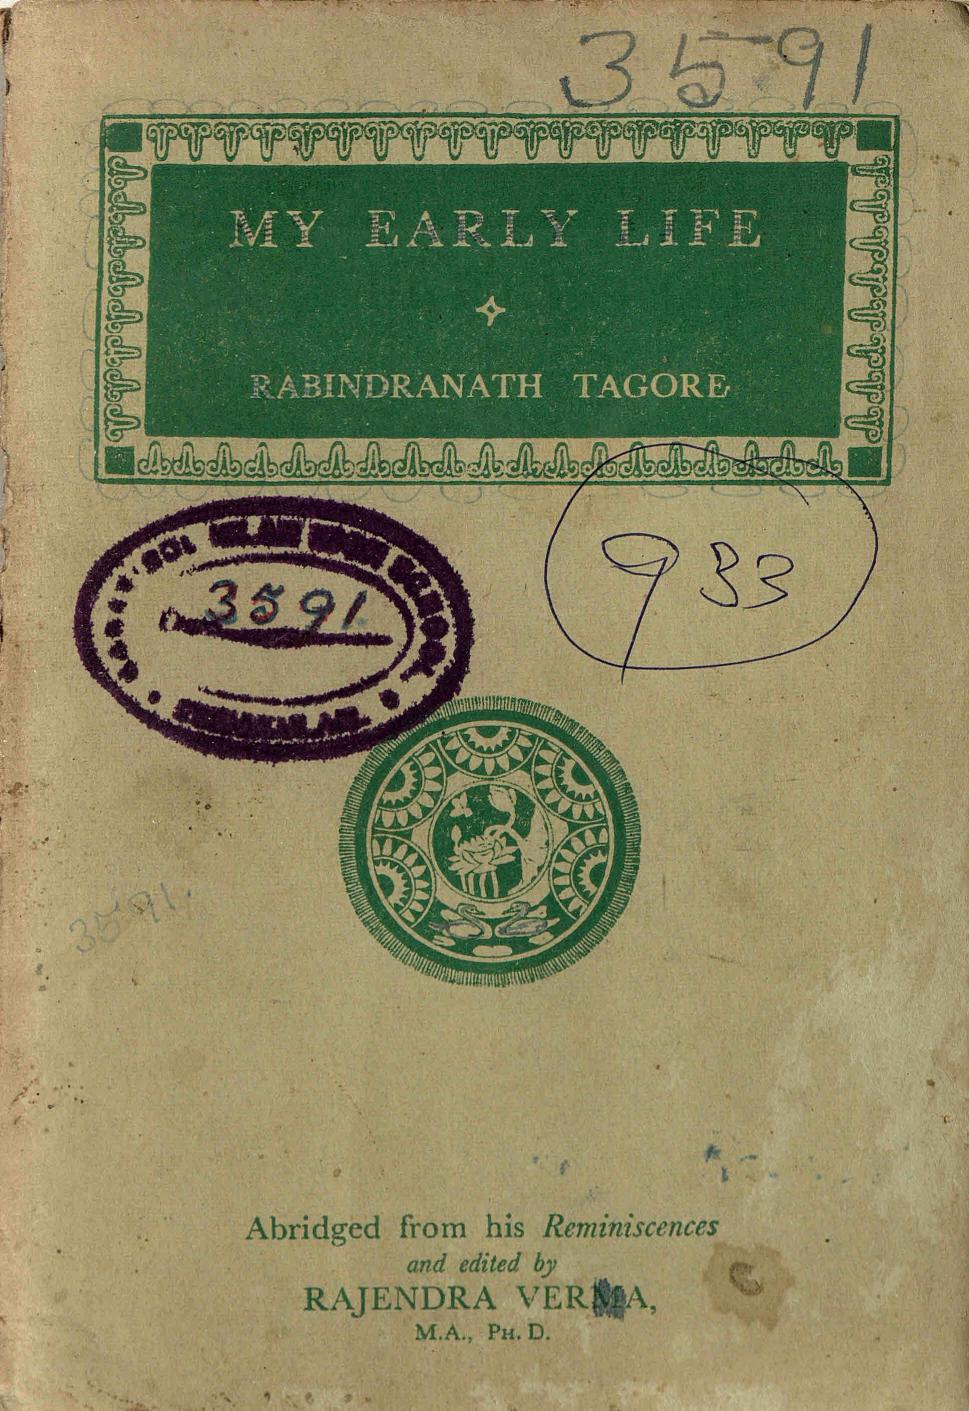 1958 - My Early Life - Rabindranath Tagore